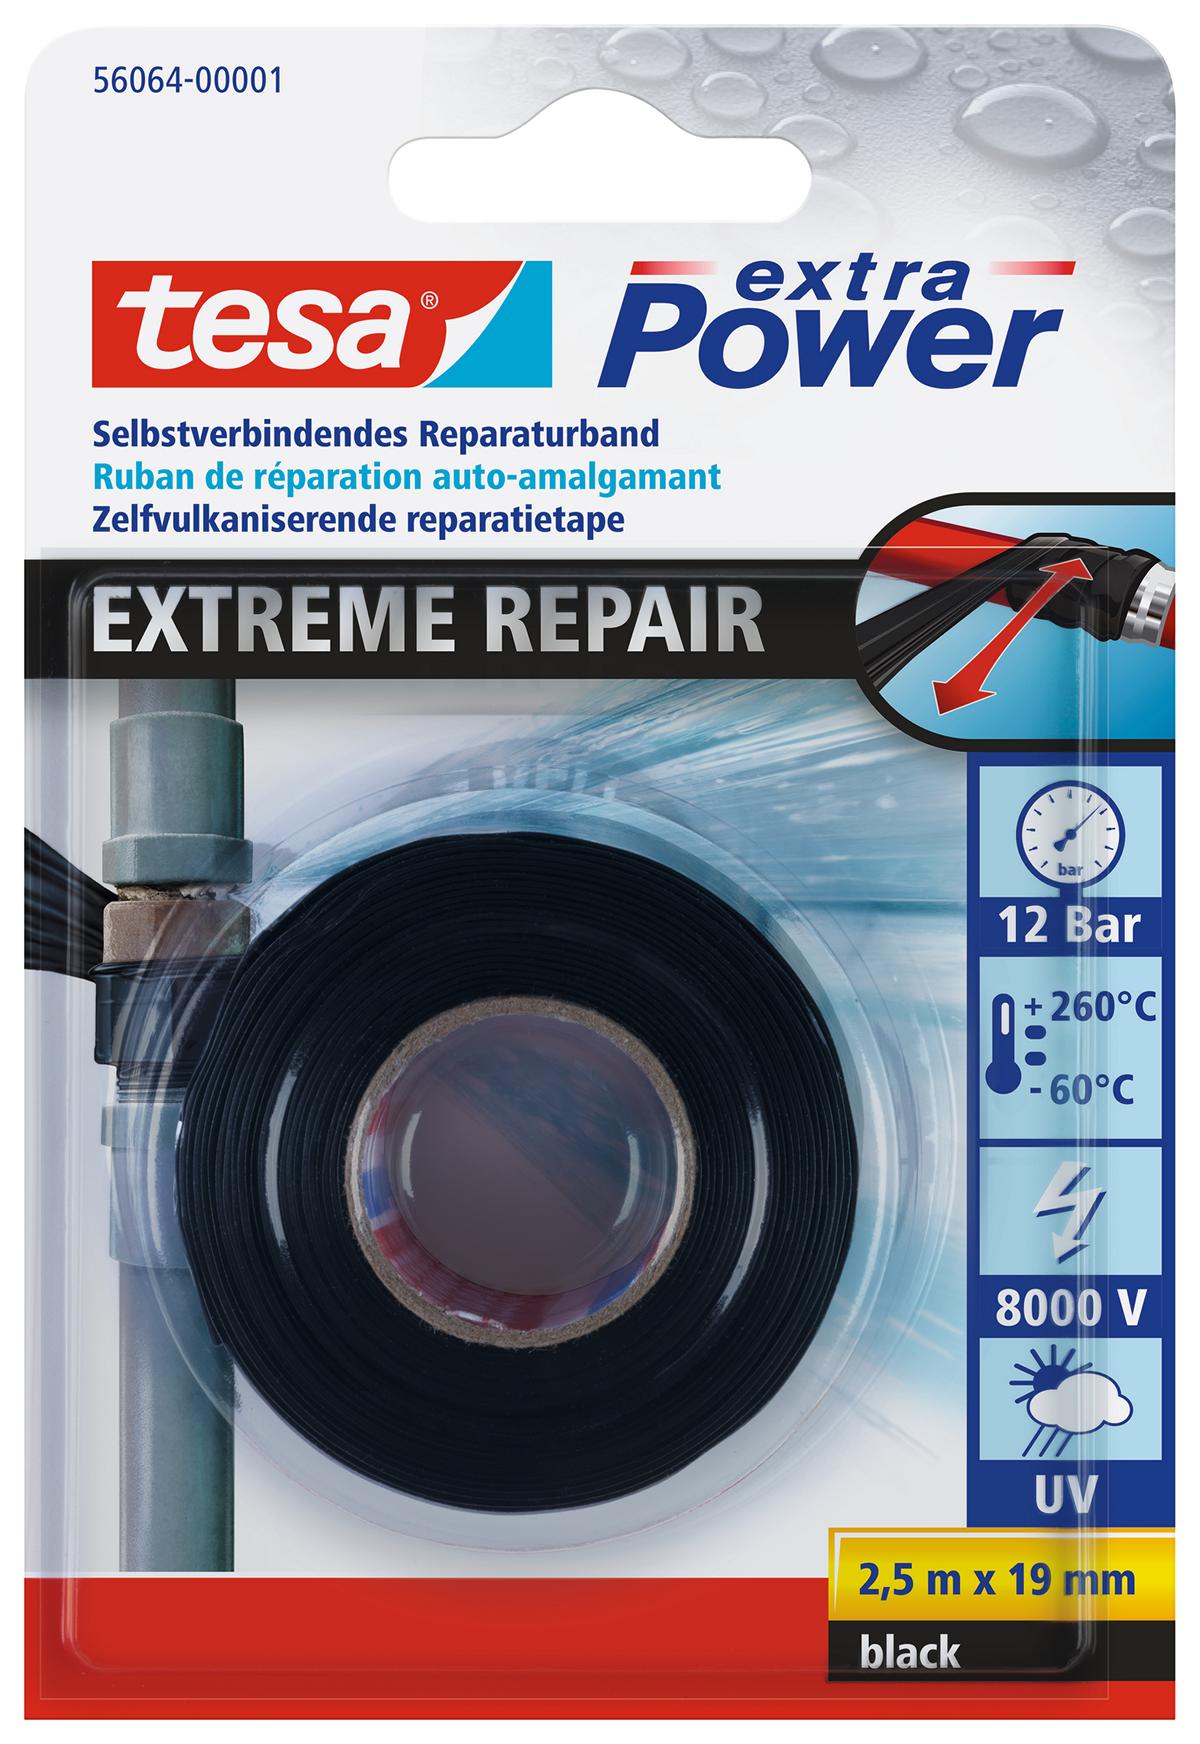 tesa extra Power Extreme Repair Reparaturband, schwarz, 2,5 m